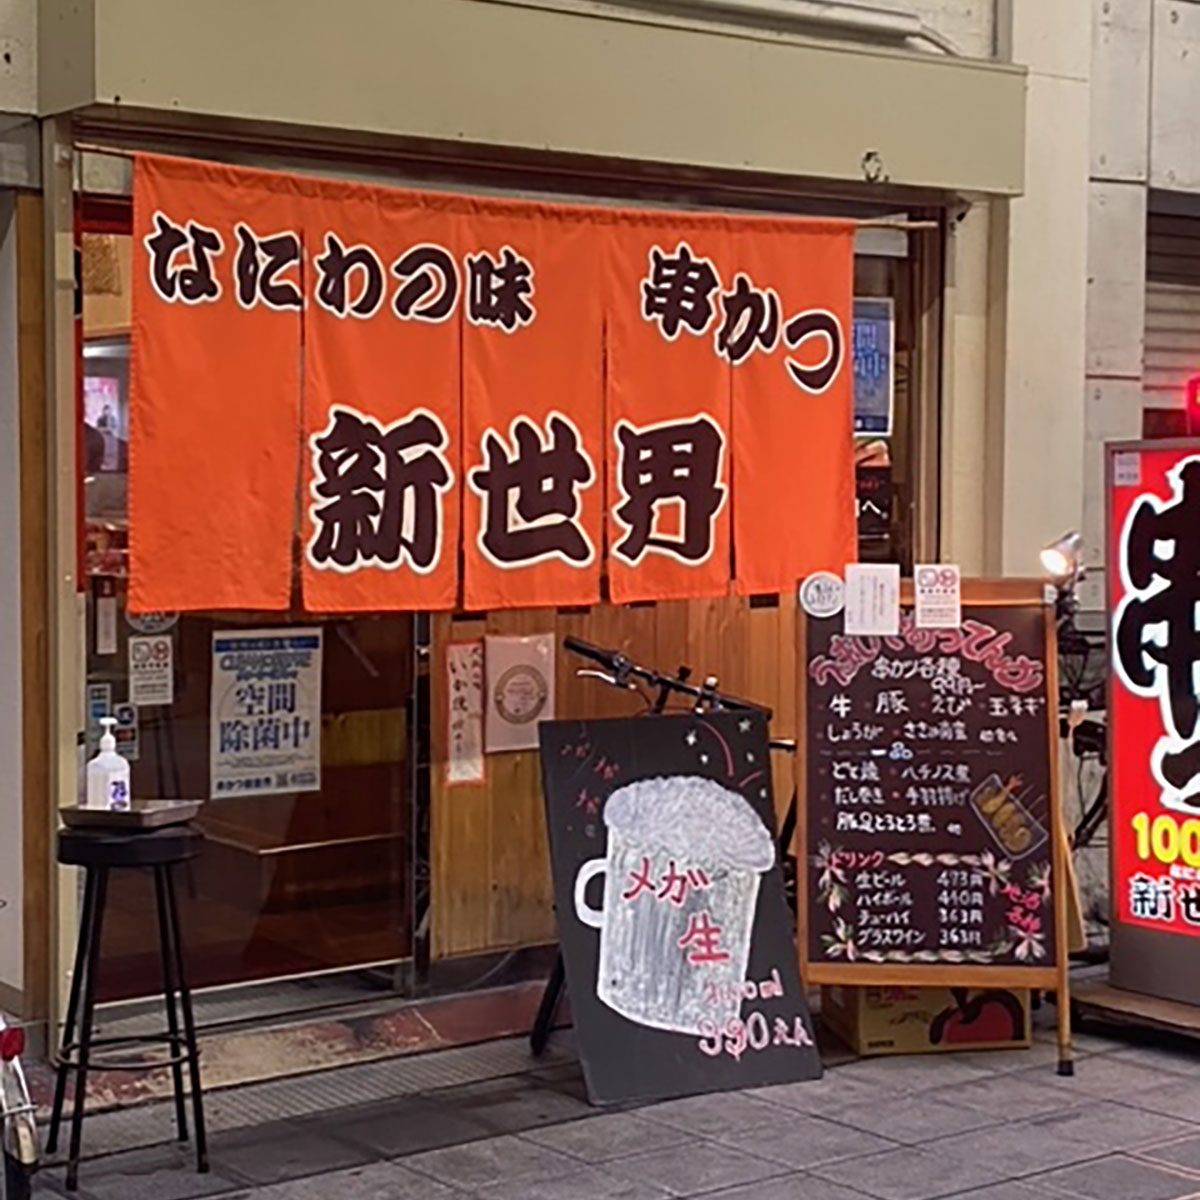 堺東 - 串かつ新世界 堺東店